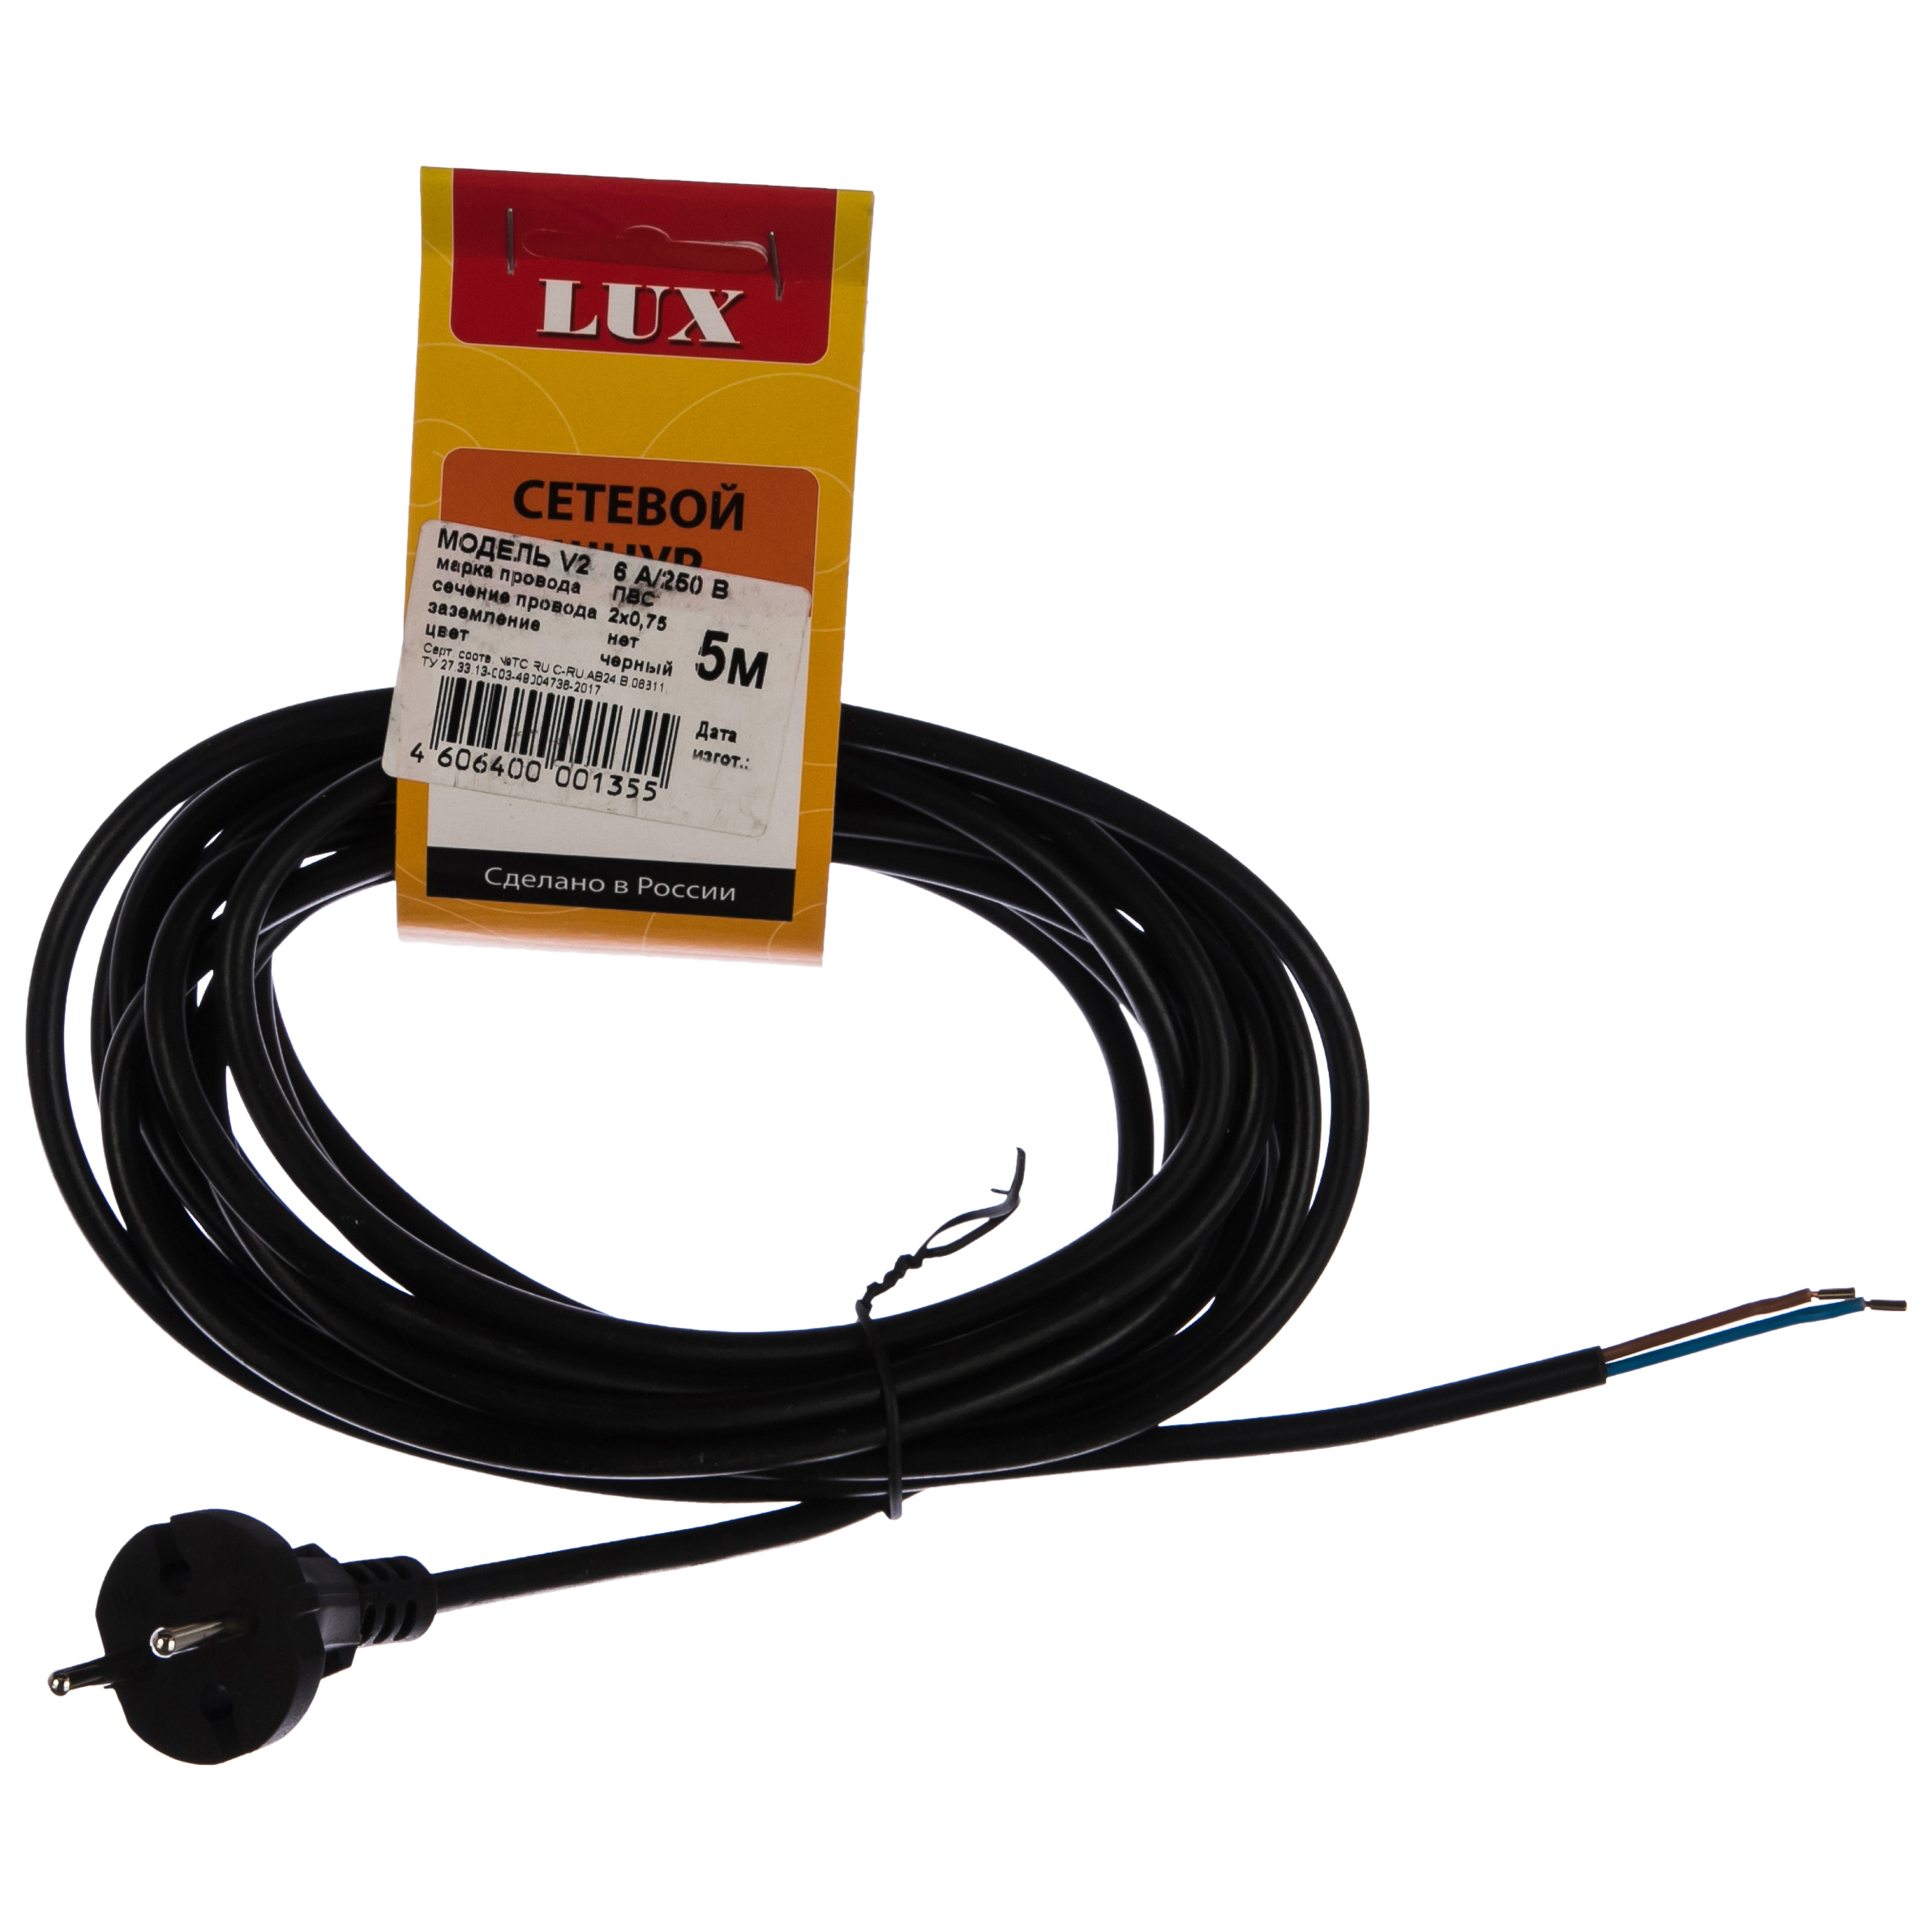 фото Lux сетевой шнур черный v2 пвс 2x0.75 5м с вилкой без з/к 4606400001355